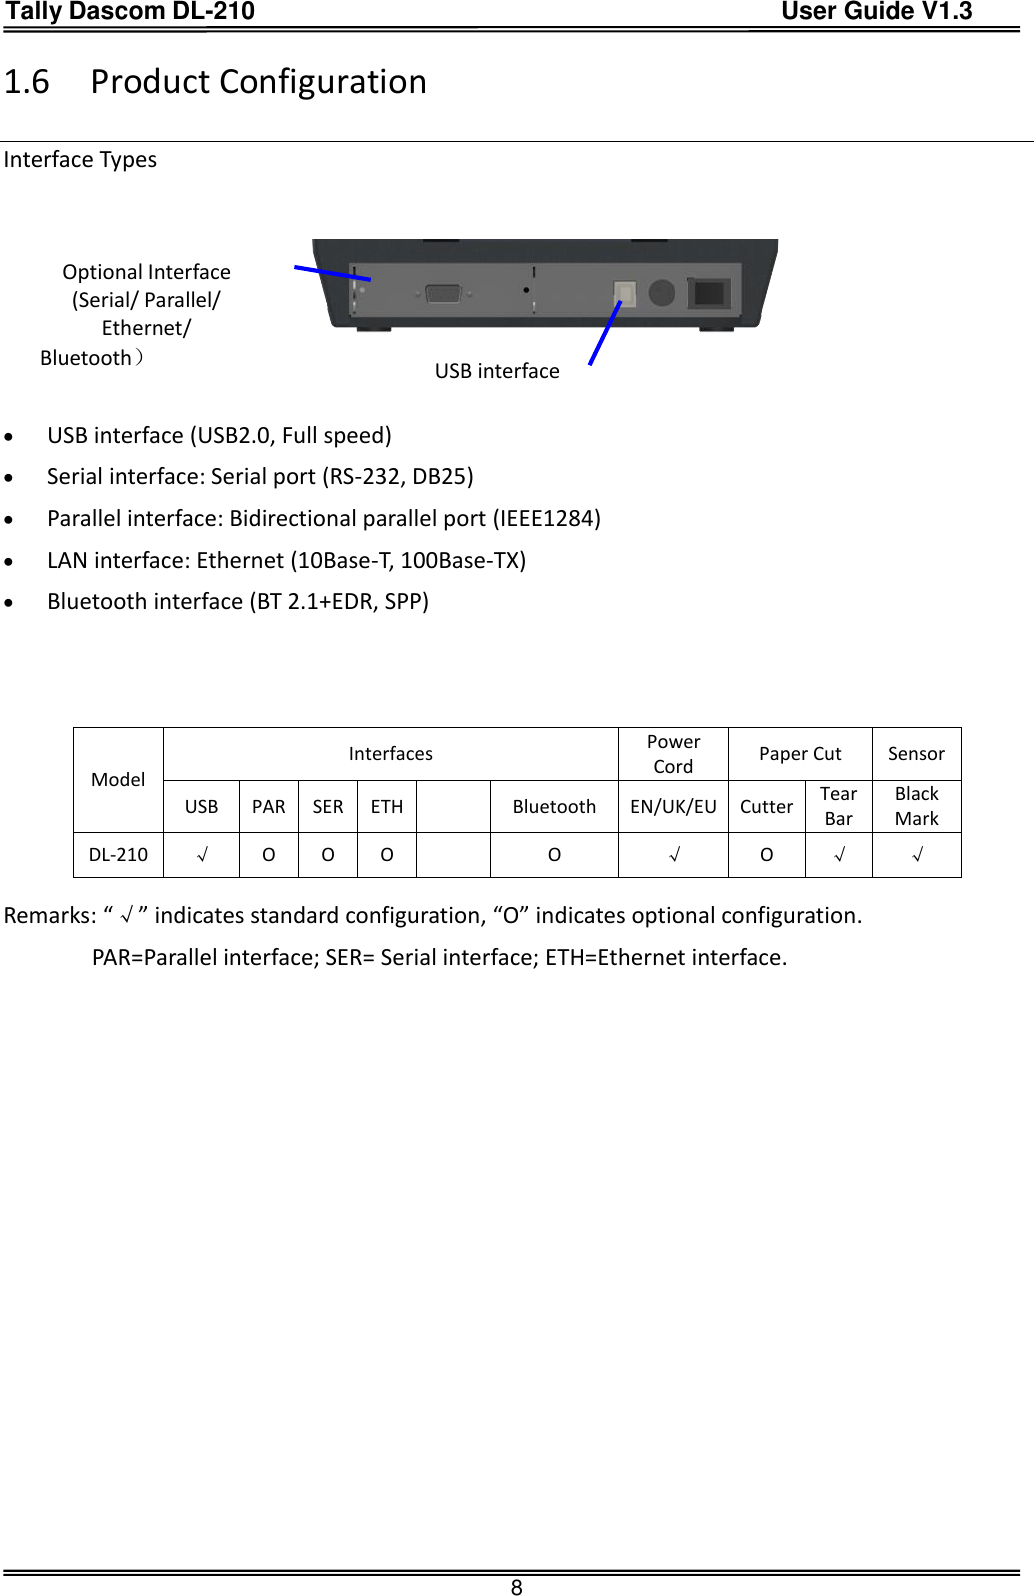 Tally Dascom DL-210                                          User Guide V1.3  8 1.6 Product Configuration  Interface Types       USB interface (USB2.0, Full speed)  Serial interface: Serial port (RS-232, DB25)  Parallel interface: Bidirectional parallel port (IEEE1284)  LAN interface: Ethernet (10Base-T, 100Base-TX)  Bluetooth interface (BT 2.1+EDR, SPP)     Model Interfaces Power Cord Paper Cut Sensor USB PAR SER ETH  Bluetooth EN/UK/EU Cutter Tear Bar Black Mark DL-210 √ O O O  O √ O √ √ Remarks: “√” indicates standard configuration, “O” indicates optional configuration. PAR=Parallel interface; SER= Serial interface; ETH=Ethernet interface. Optional Interface (Serial/ Parallel/ Ethernet/   Bluetooth） USB interface 